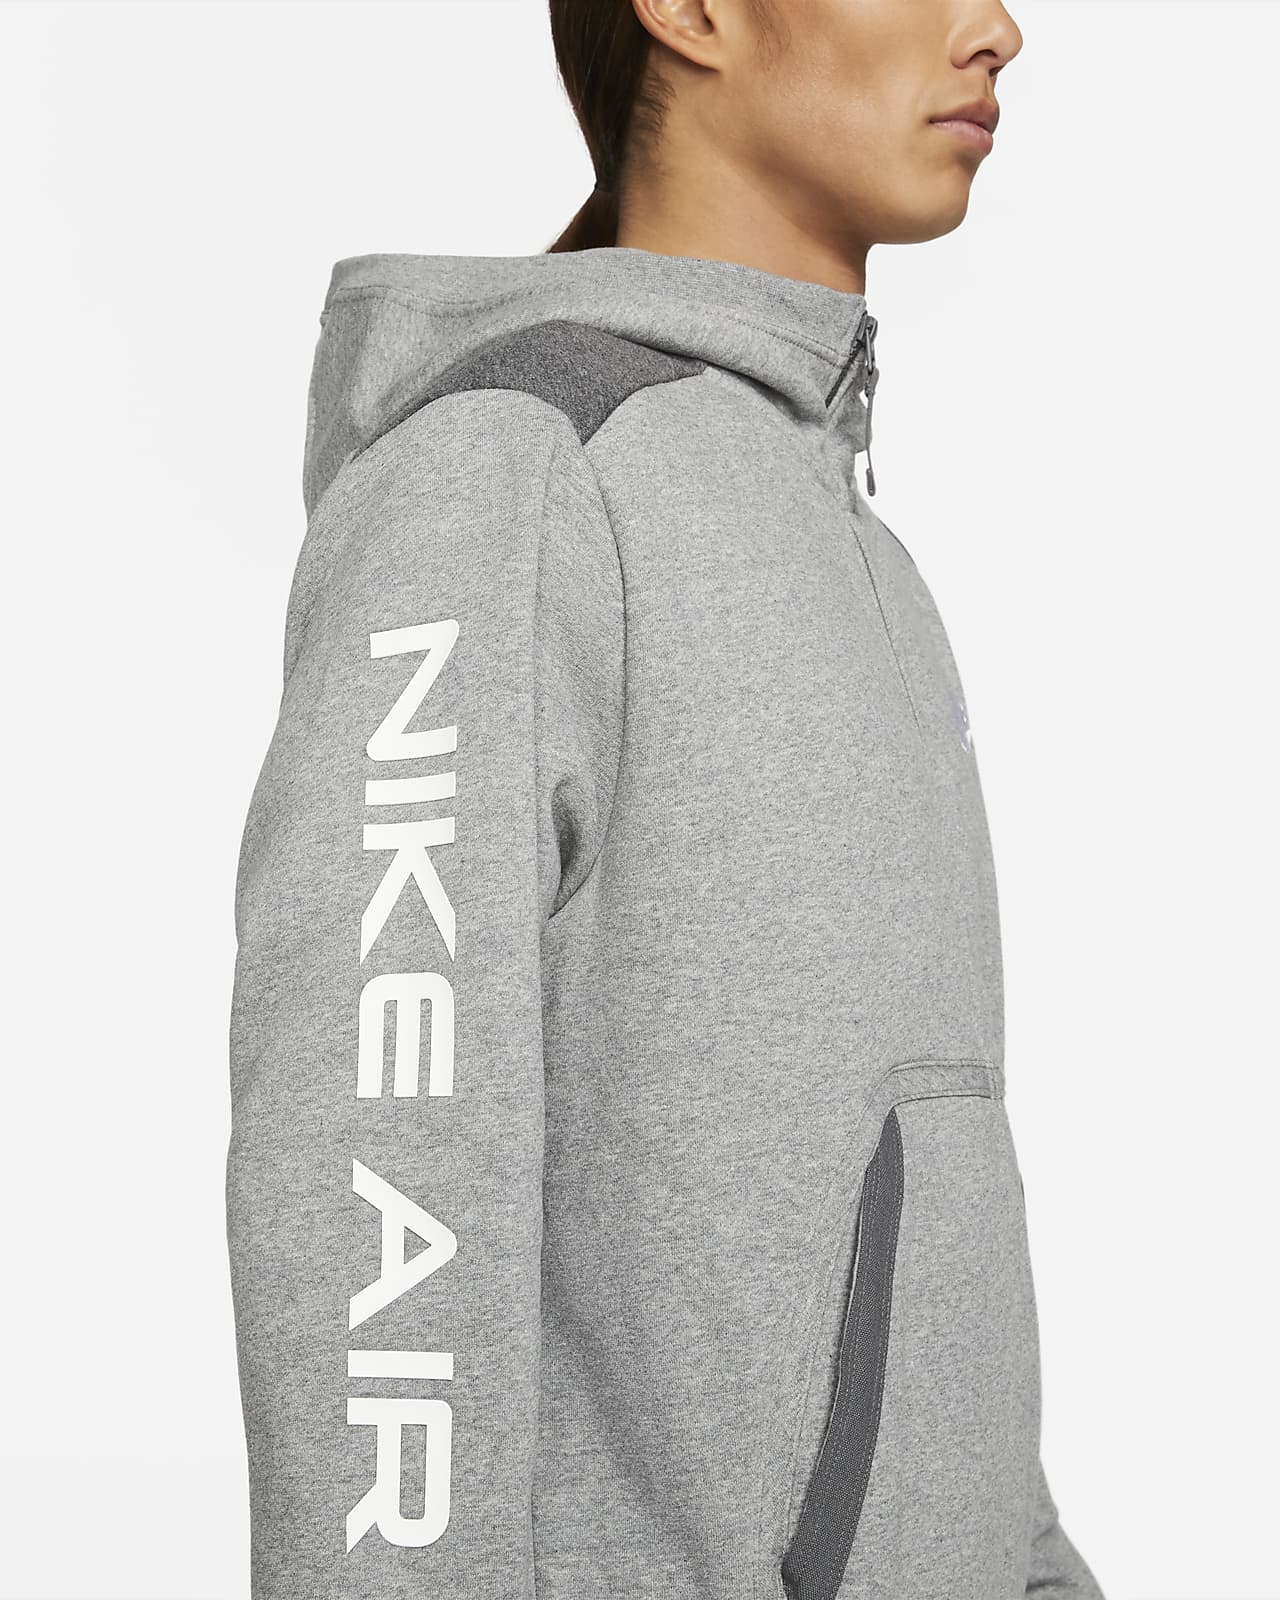 Nike公式 ナイキ エア メンズ フルジップ パーカー オンラインストア 通販サイト